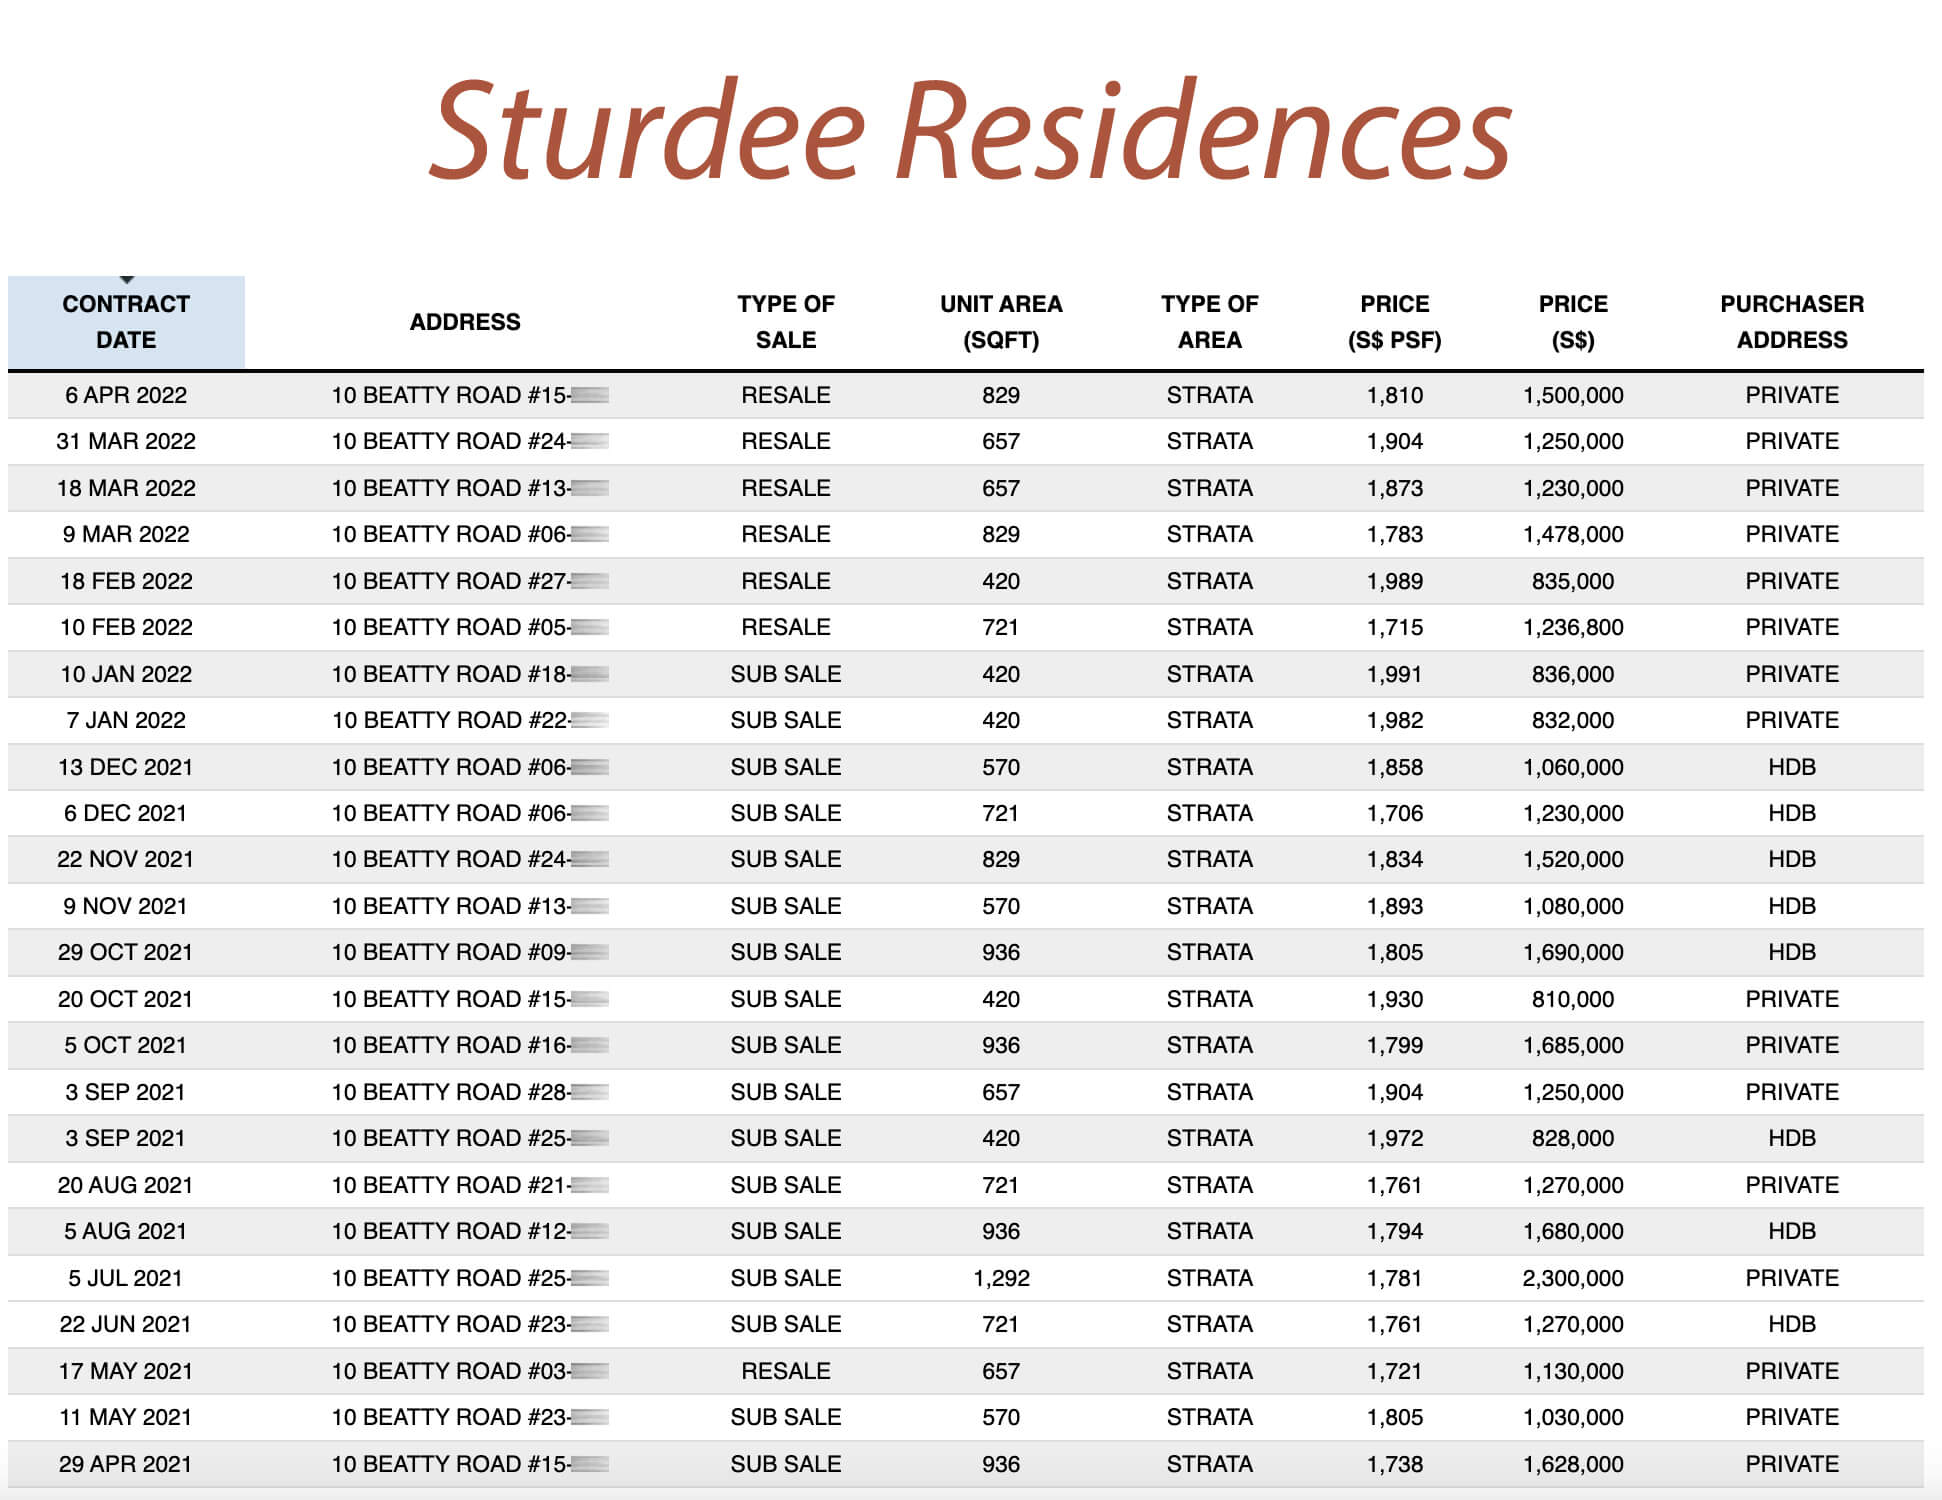 Sturdee Residences Transactions Apr 21 to 22